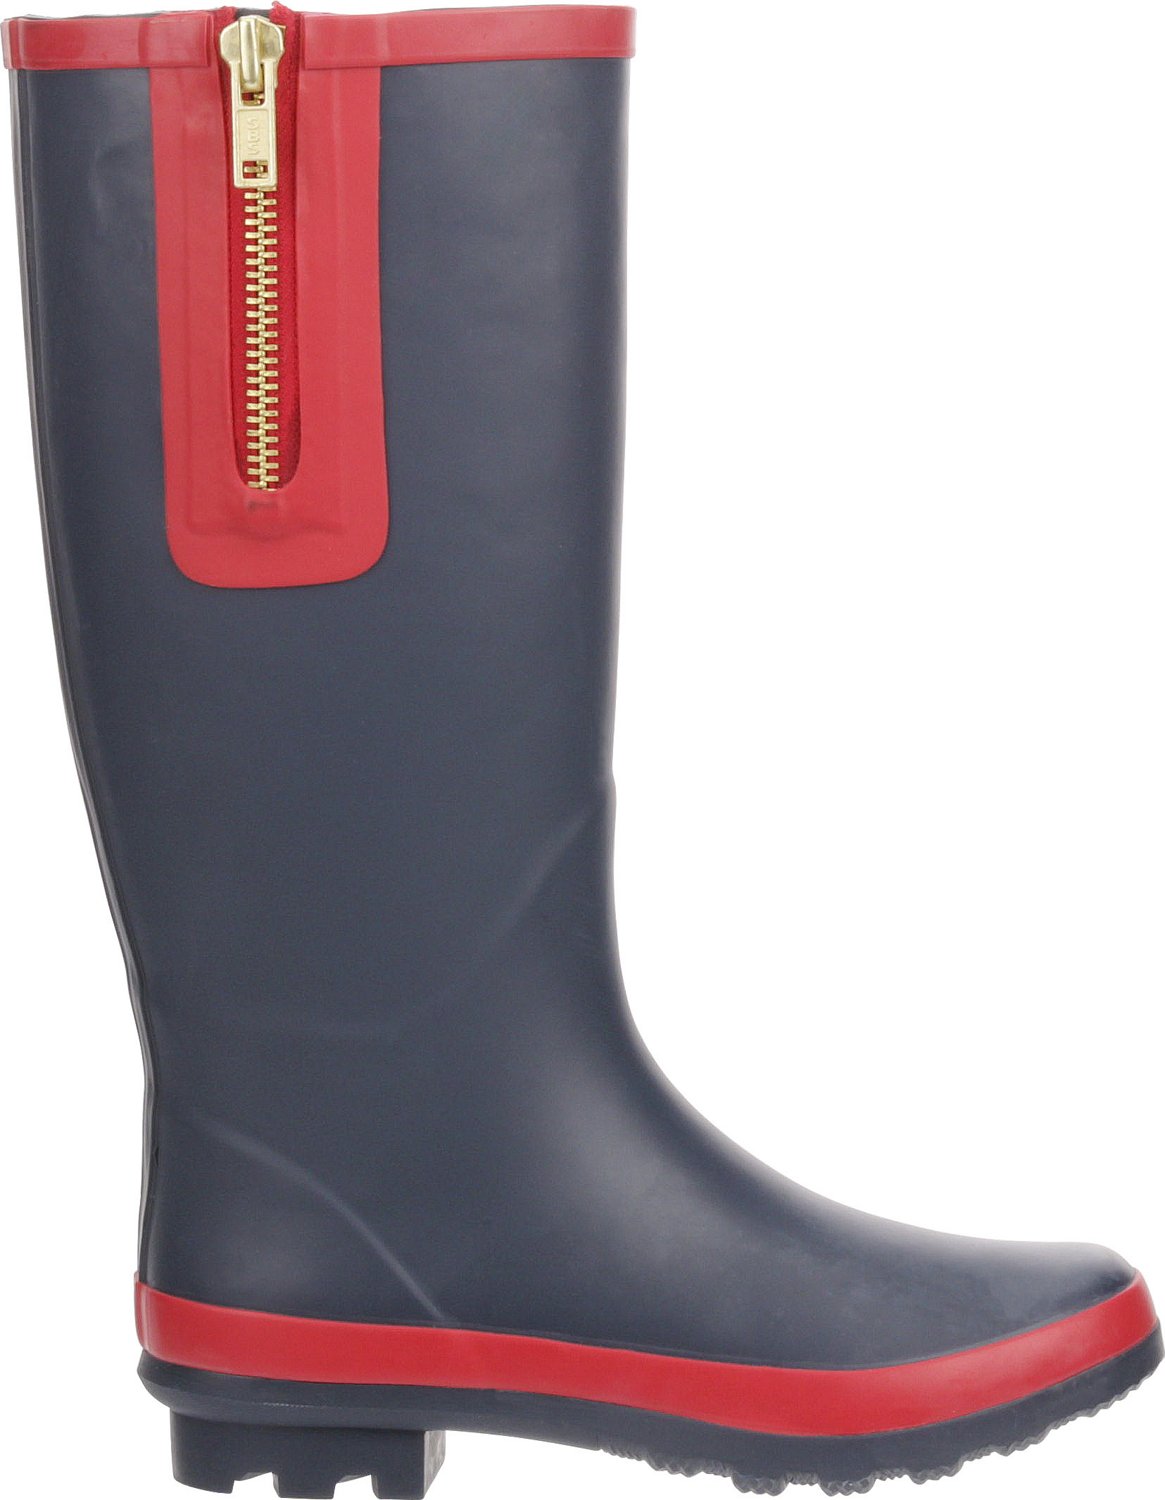 Women's Rain & Rubber Boots | Women's Rain Boots, Women's Rubber ...